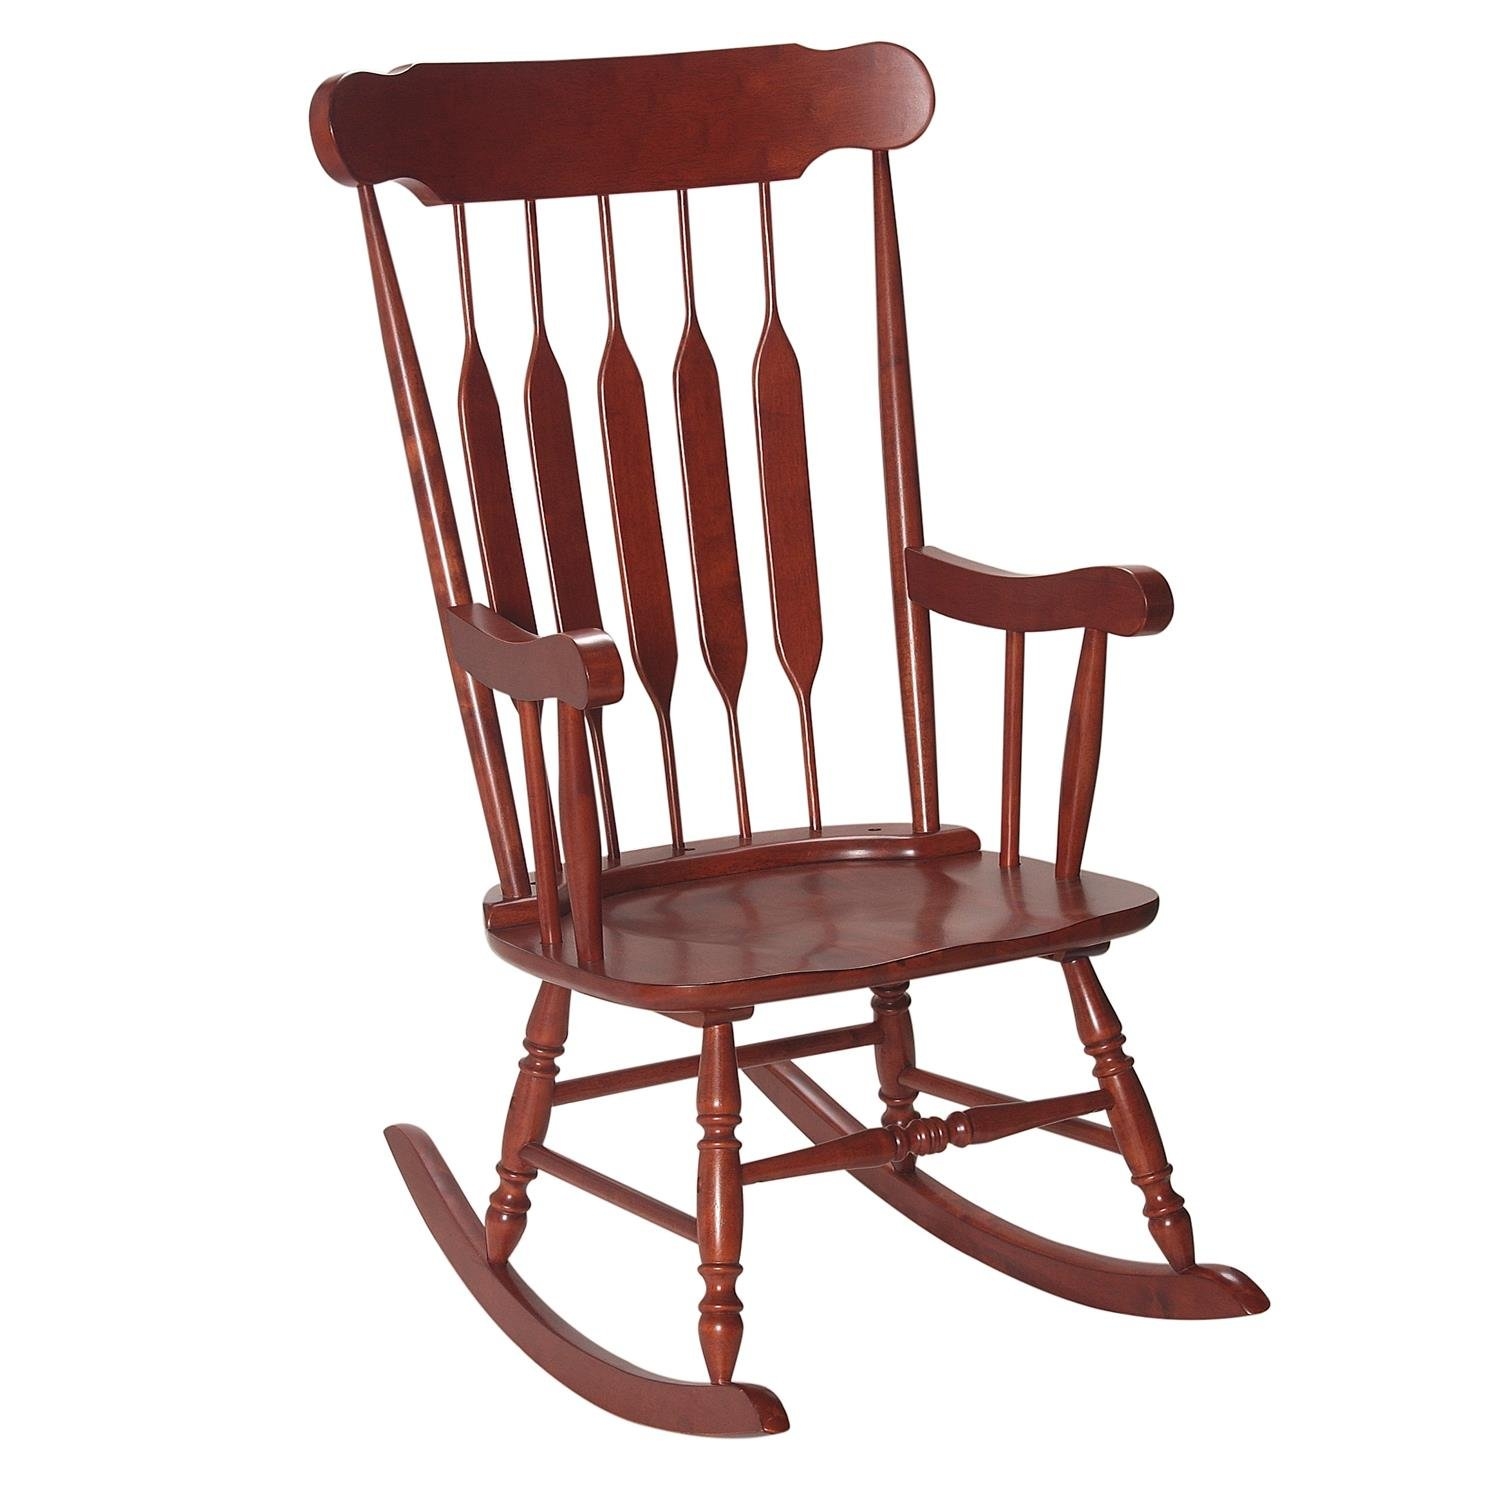 GiftMark Adult Rocking Chair, Cherry